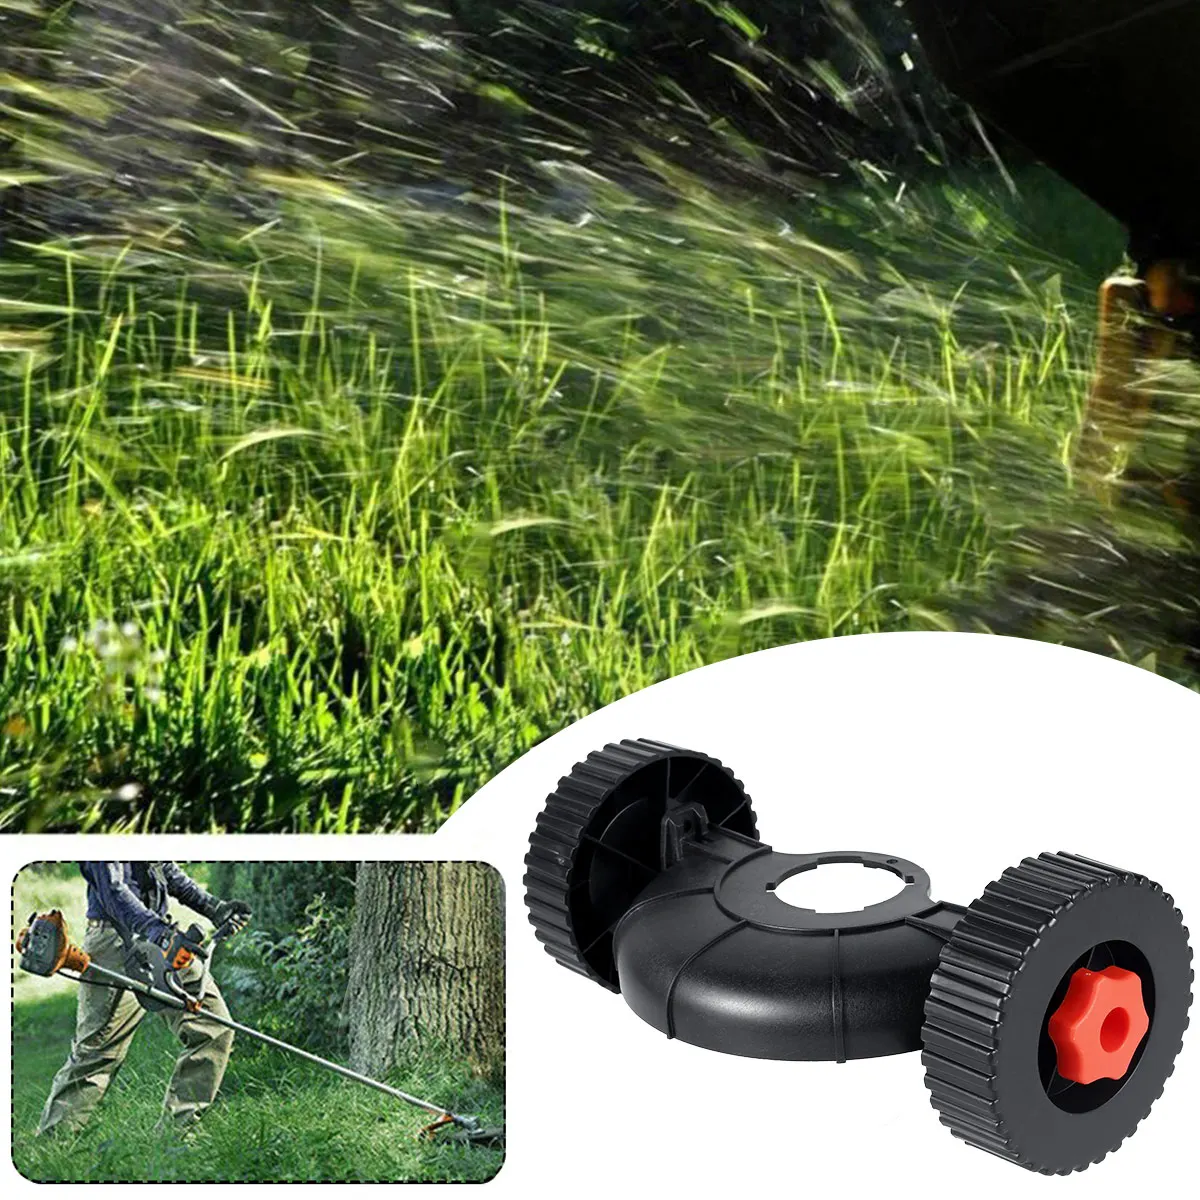 Support Wheel Lawn Mower Accessories Flexible Quick Change